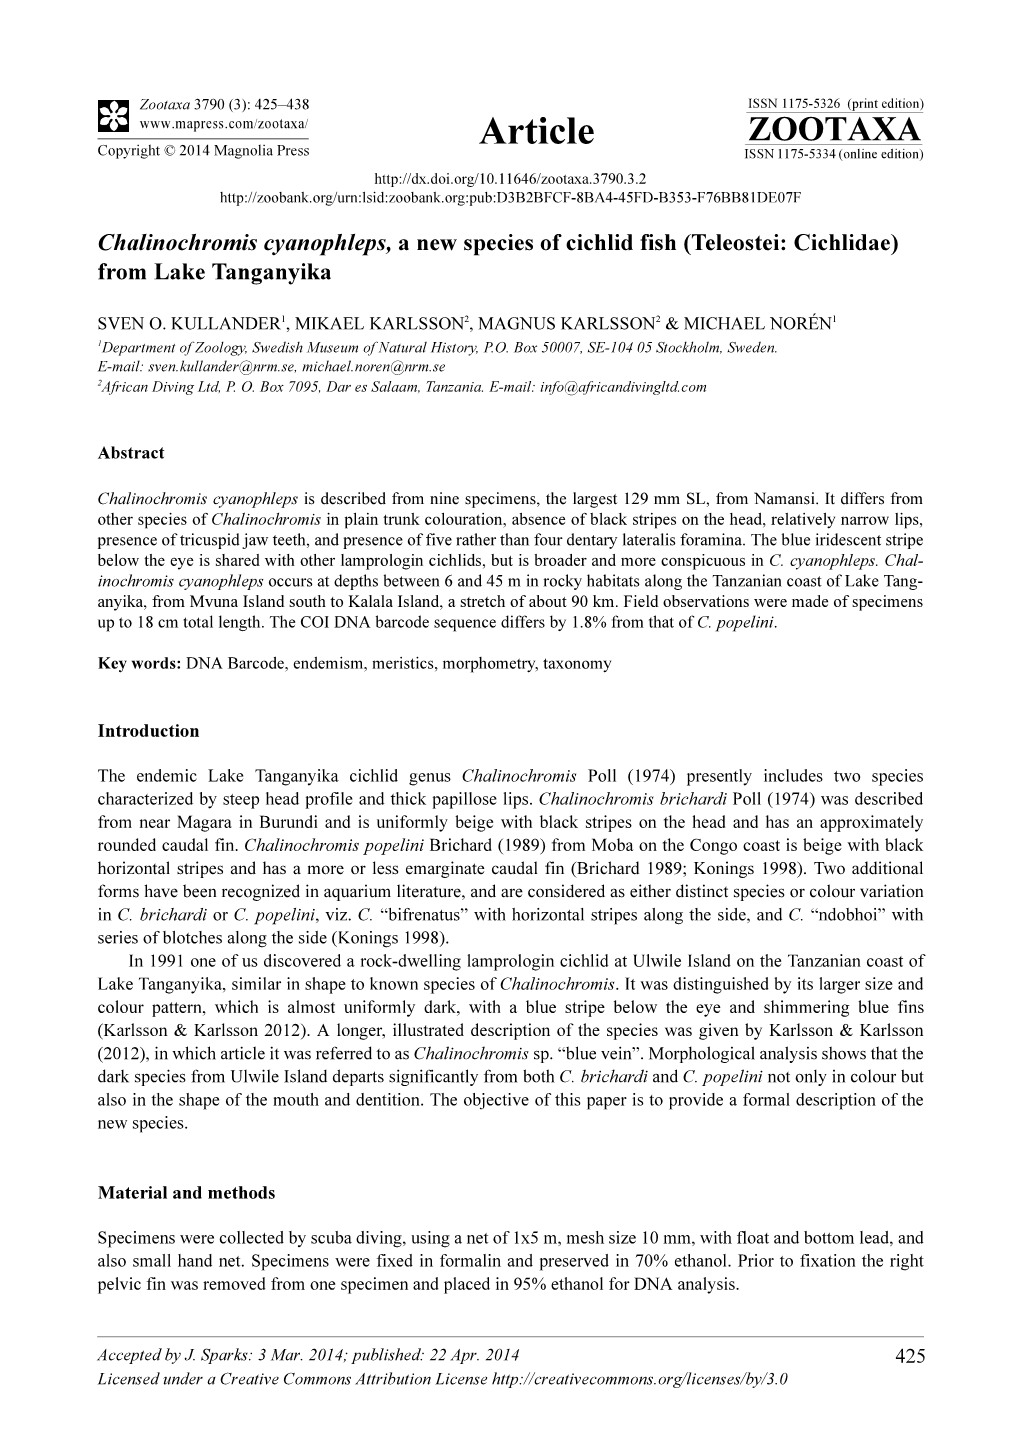 Chalinochromis Cyanophleps, a New Species of Cichlid Fish (Teleostei: Cichlidae) from Lake Tanganyika